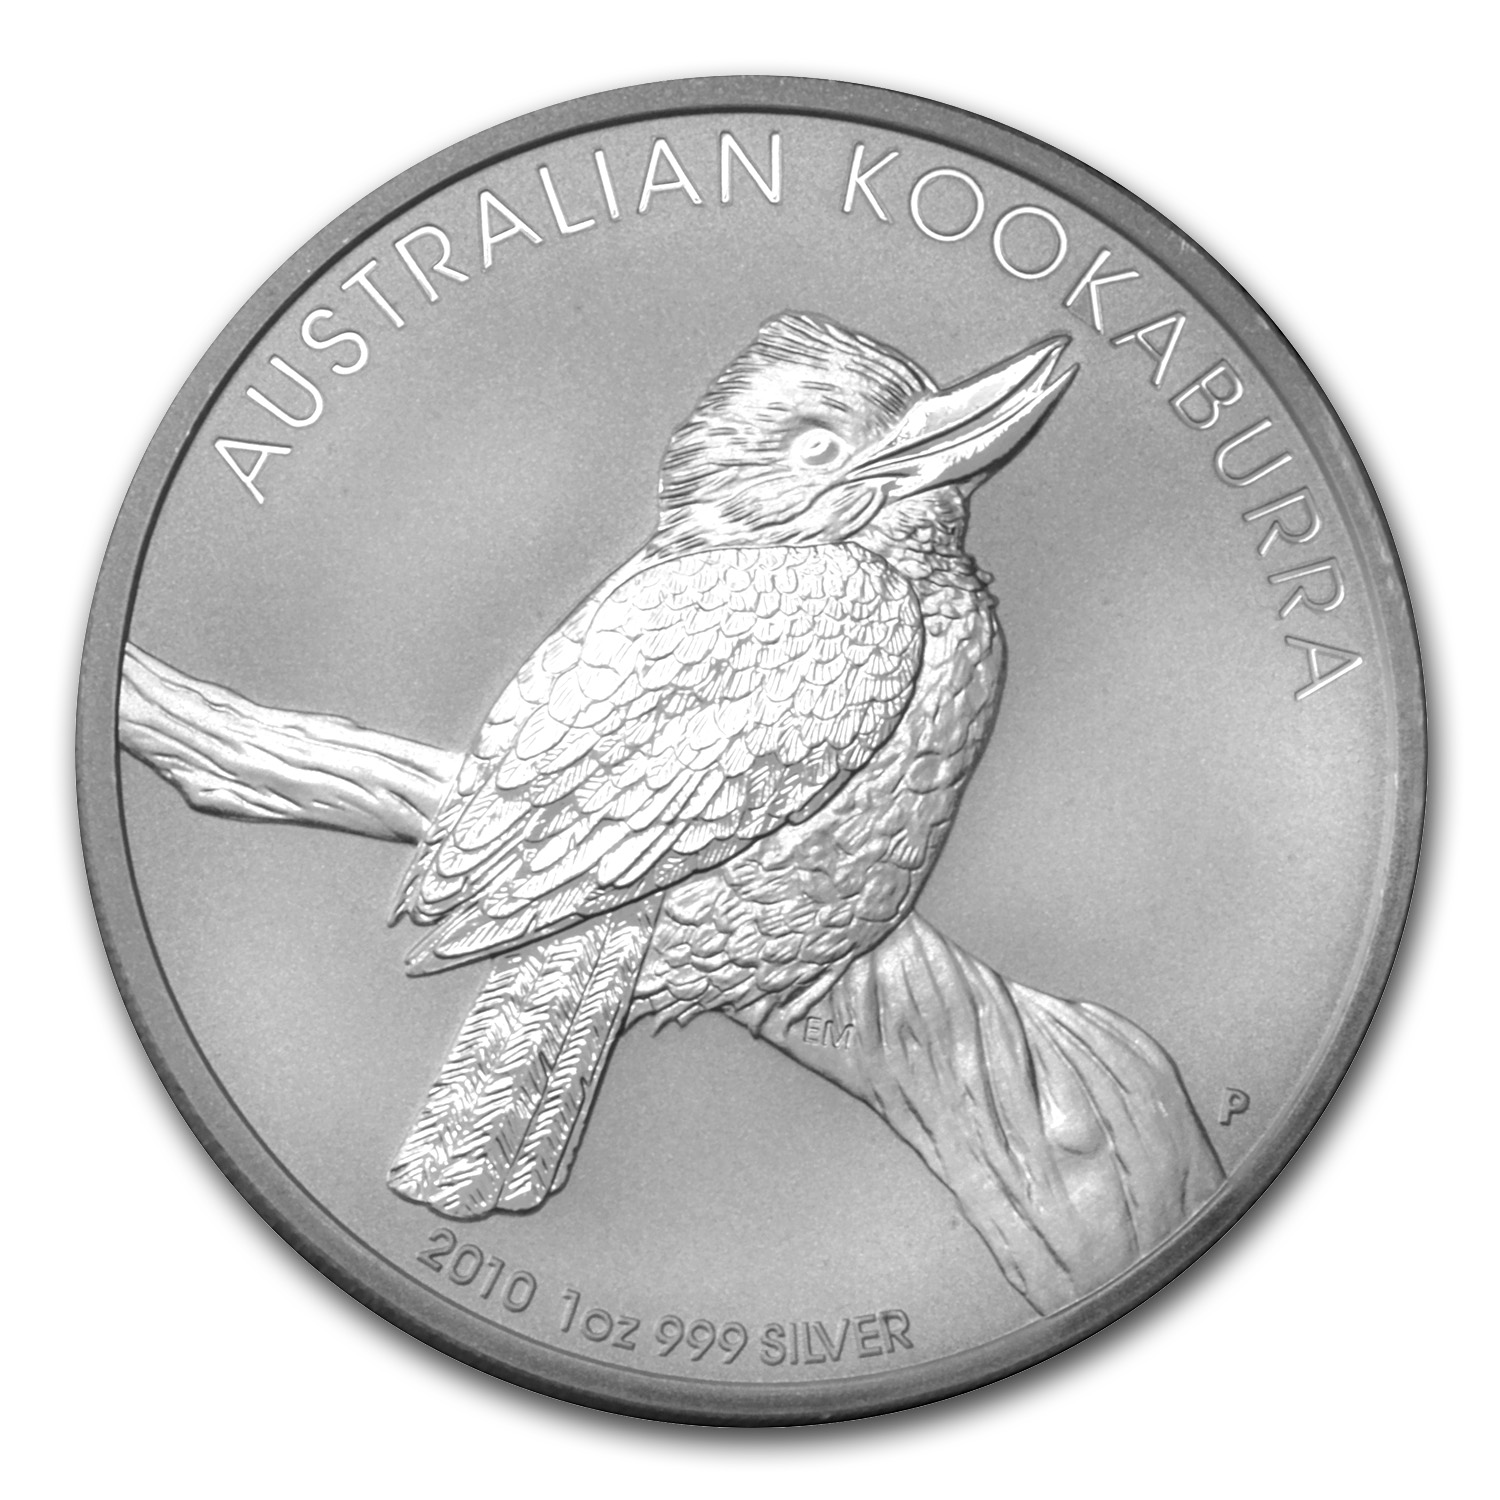 1 oz BU-ST Silver with PM capsule 2010 Australian Kookaburra round